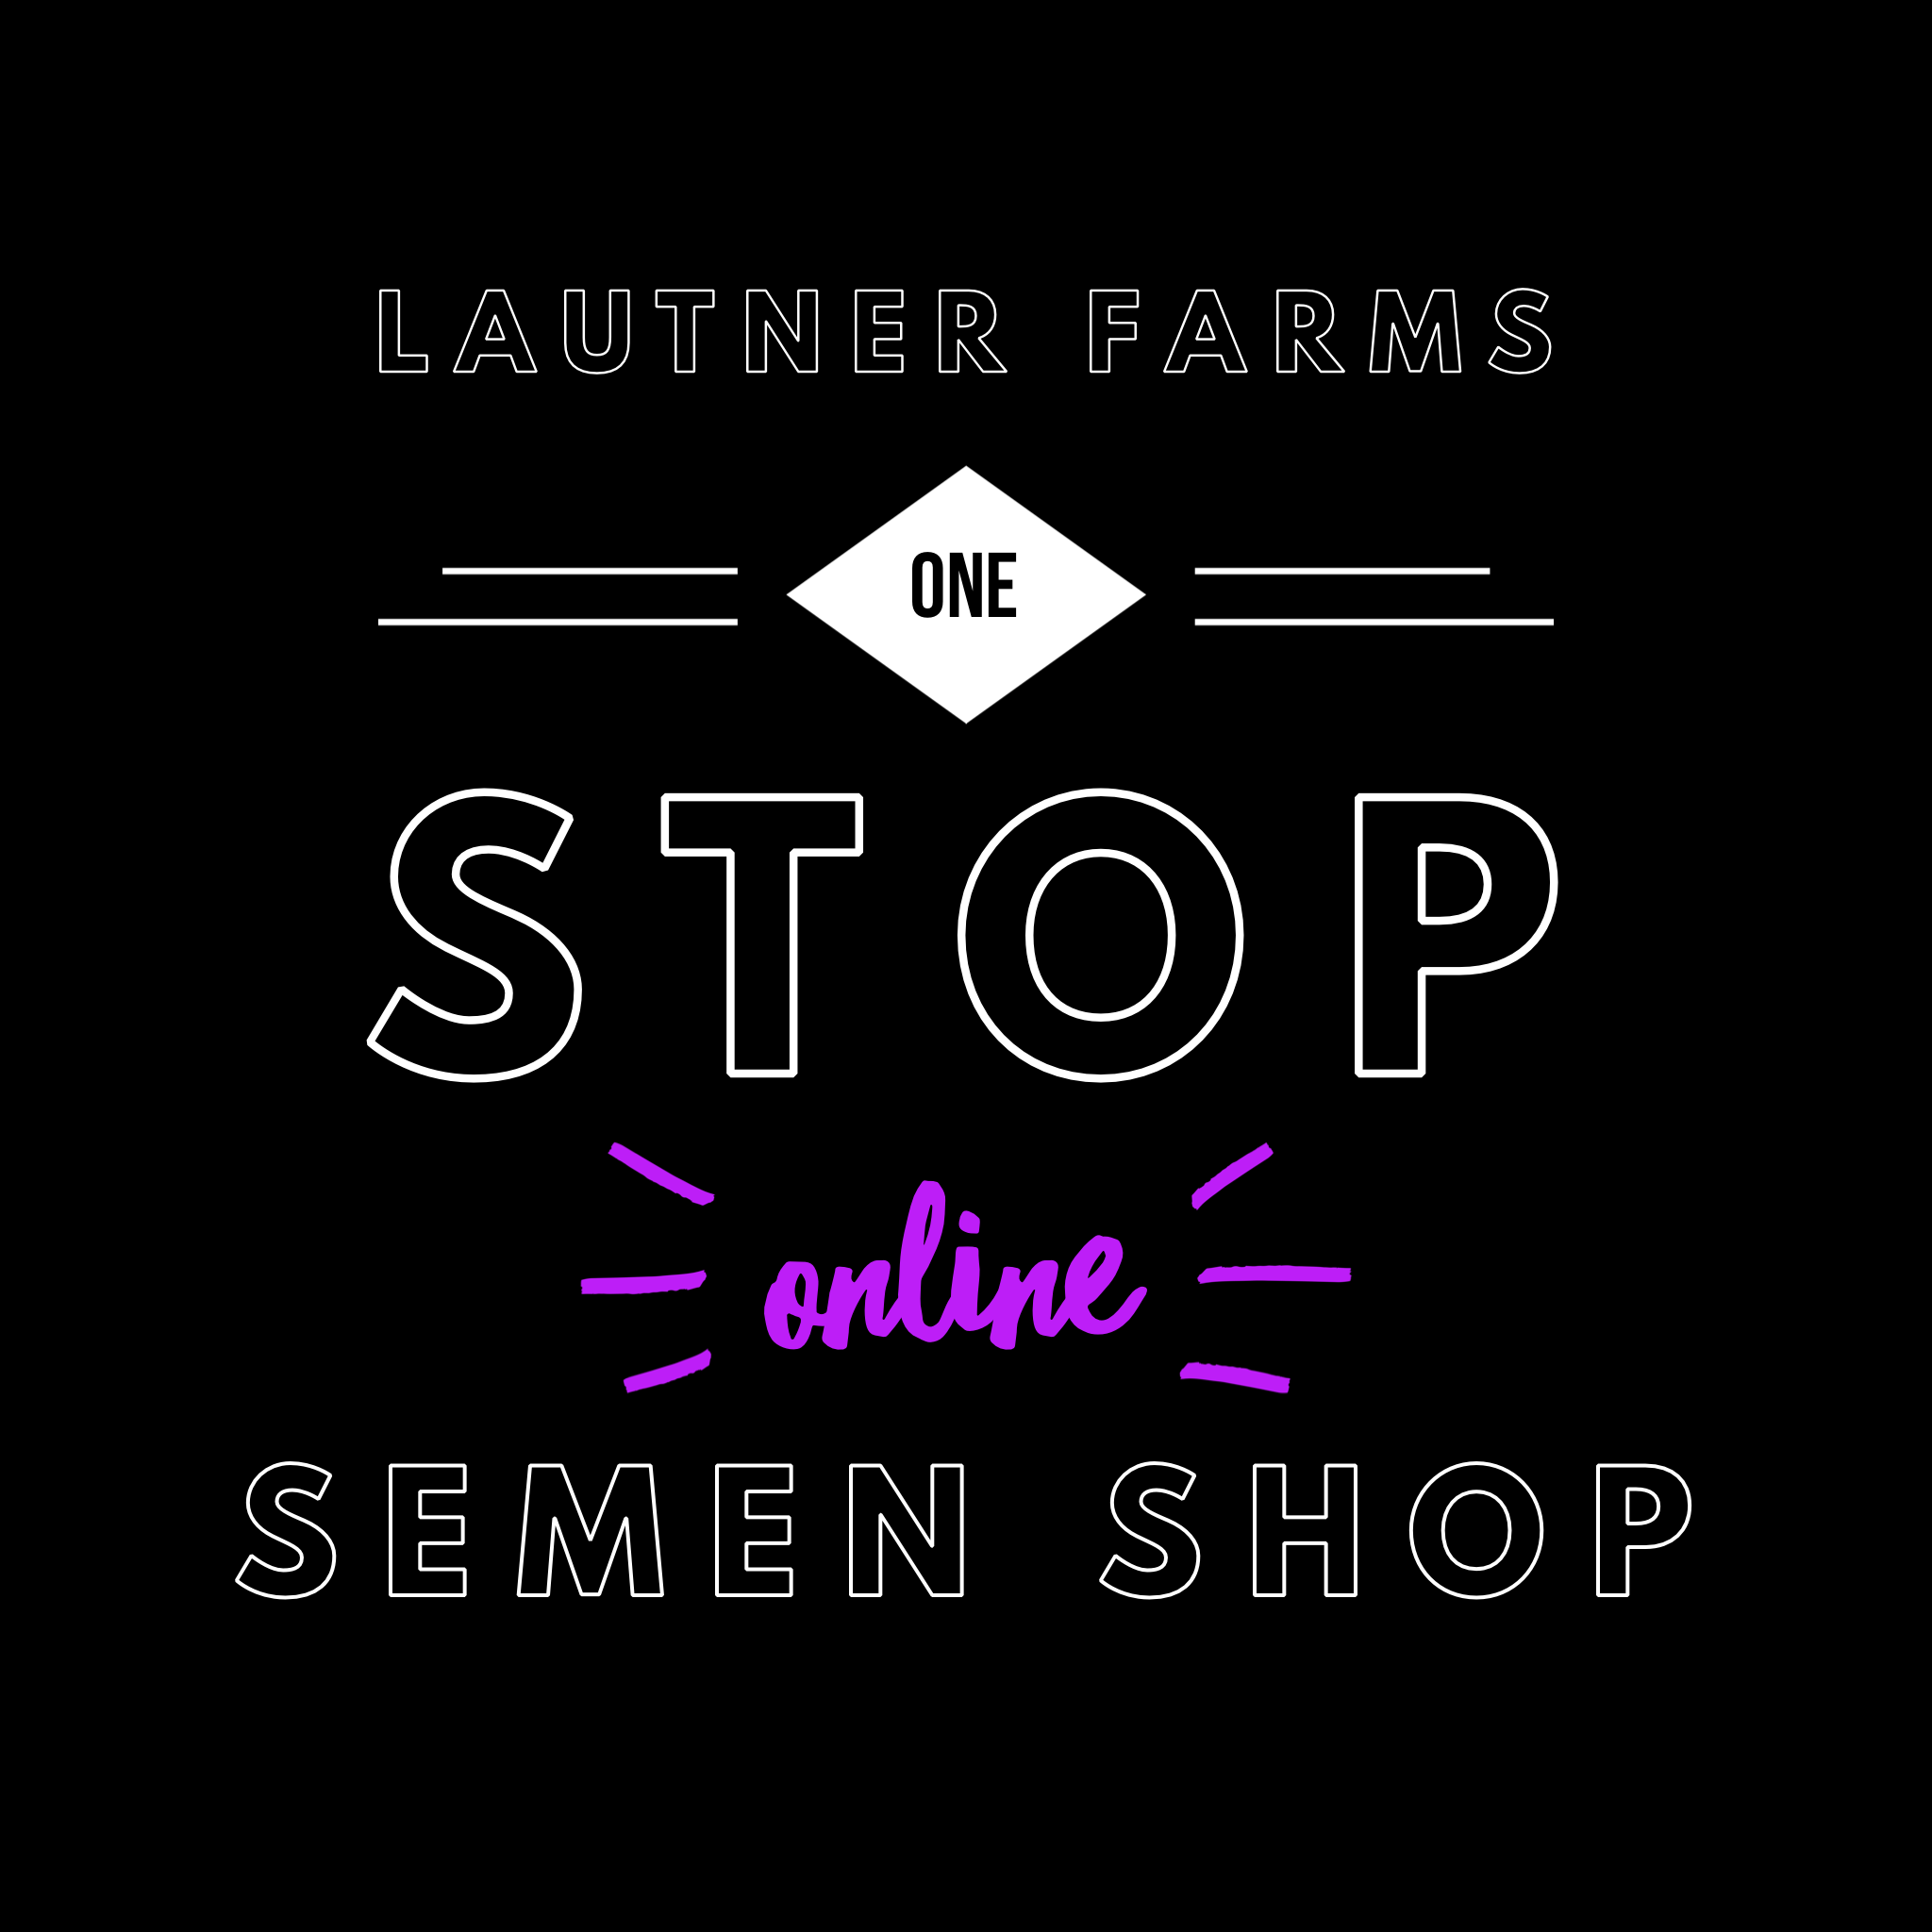 Did You Know That We Have A One Stop ️online⬅️ Semen Shop Lautner Farms